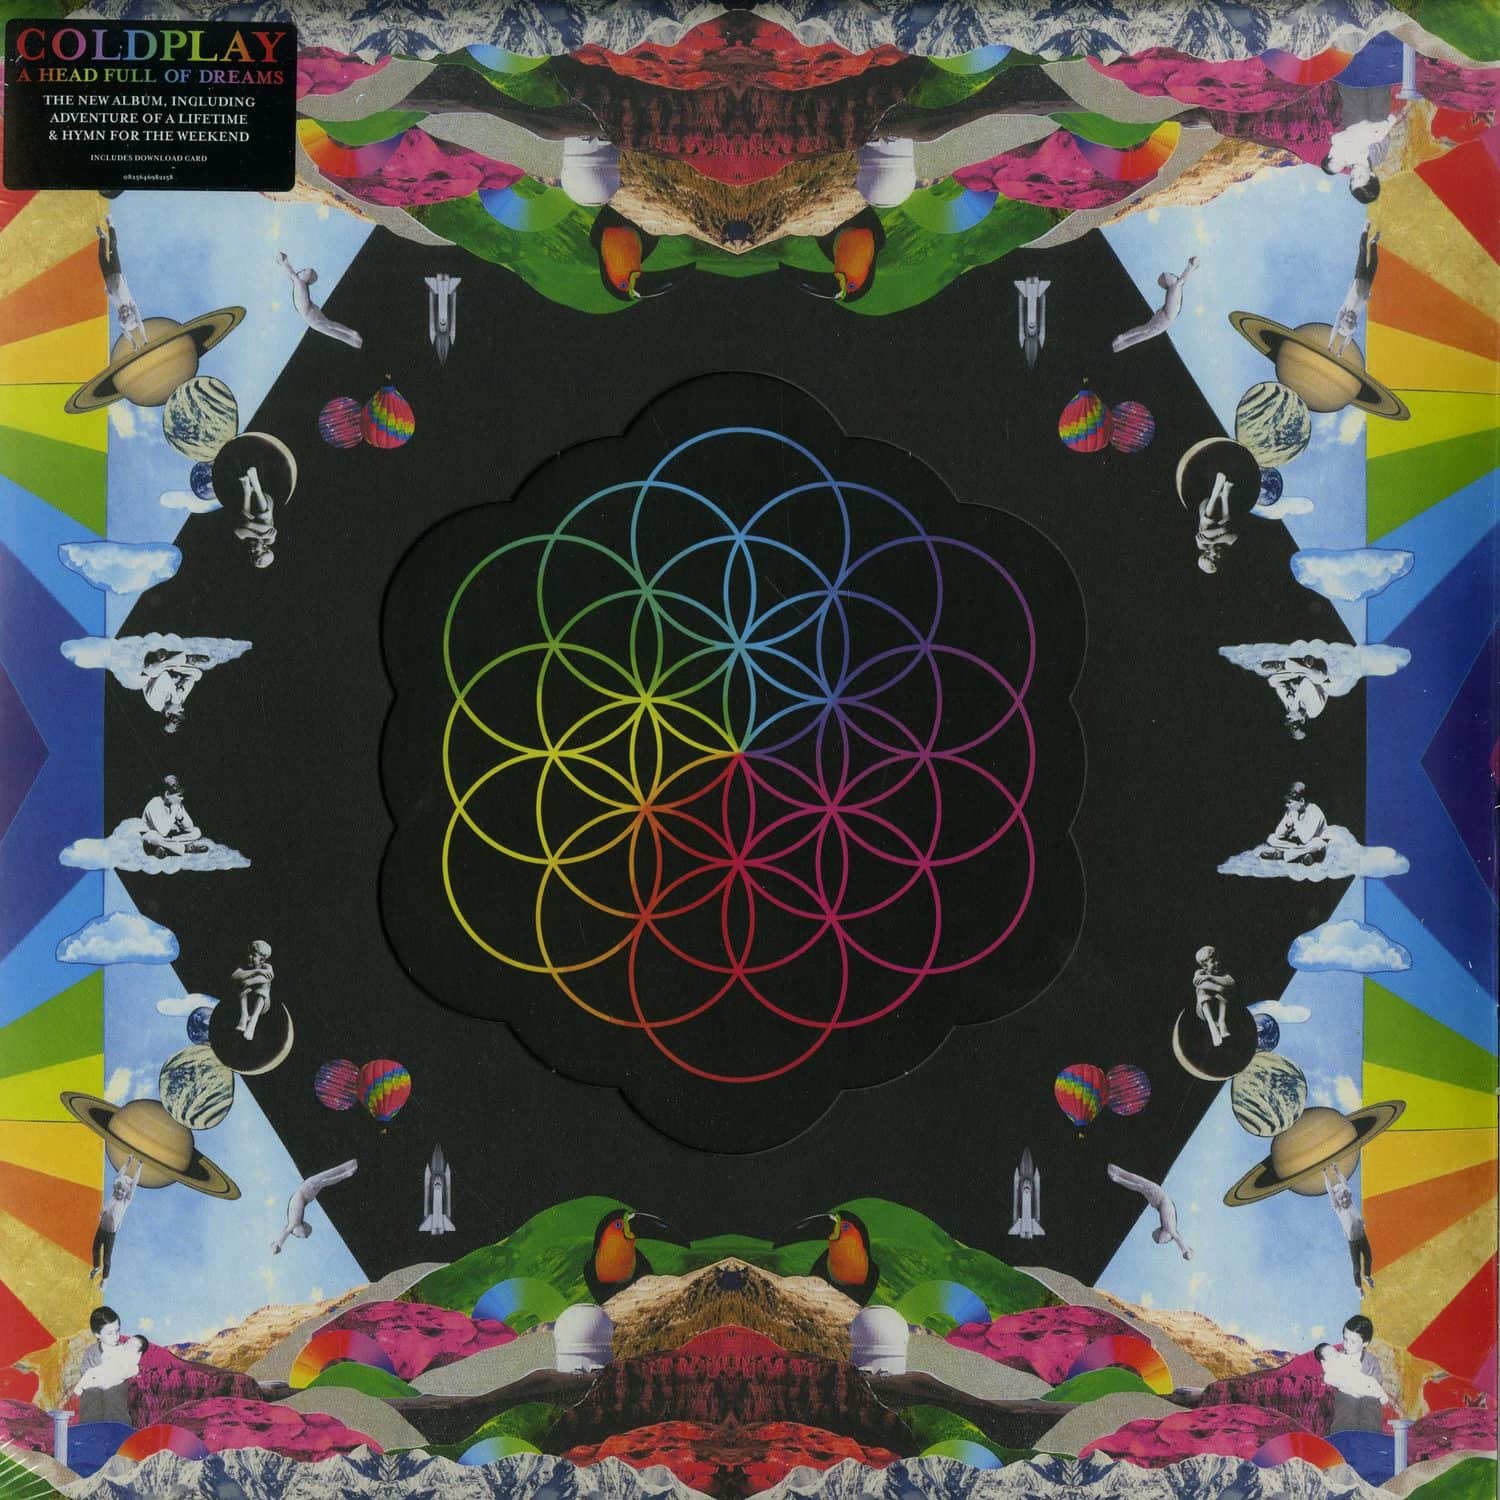 Coldplay - A HEAD FULL OF DREAMS 